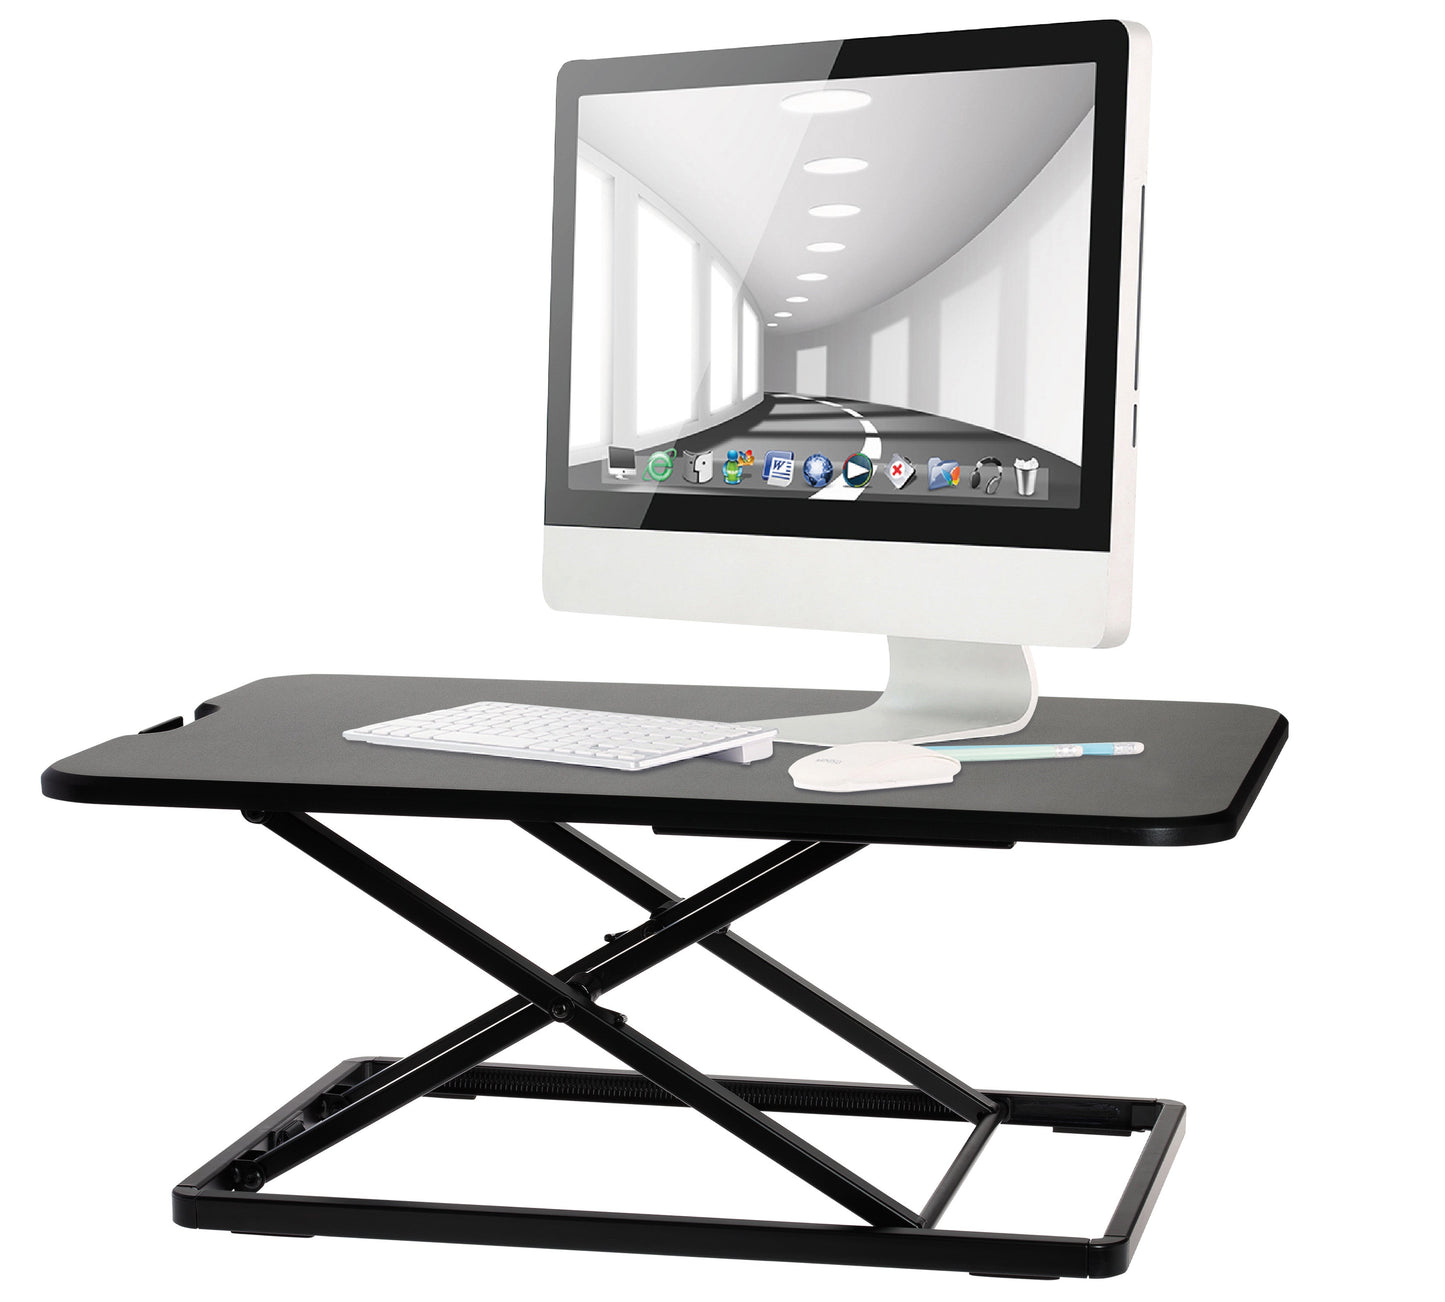 ProperAV LITE Stand Up Desk Converter with Variable Height Settings - Black - maplin.co.uk